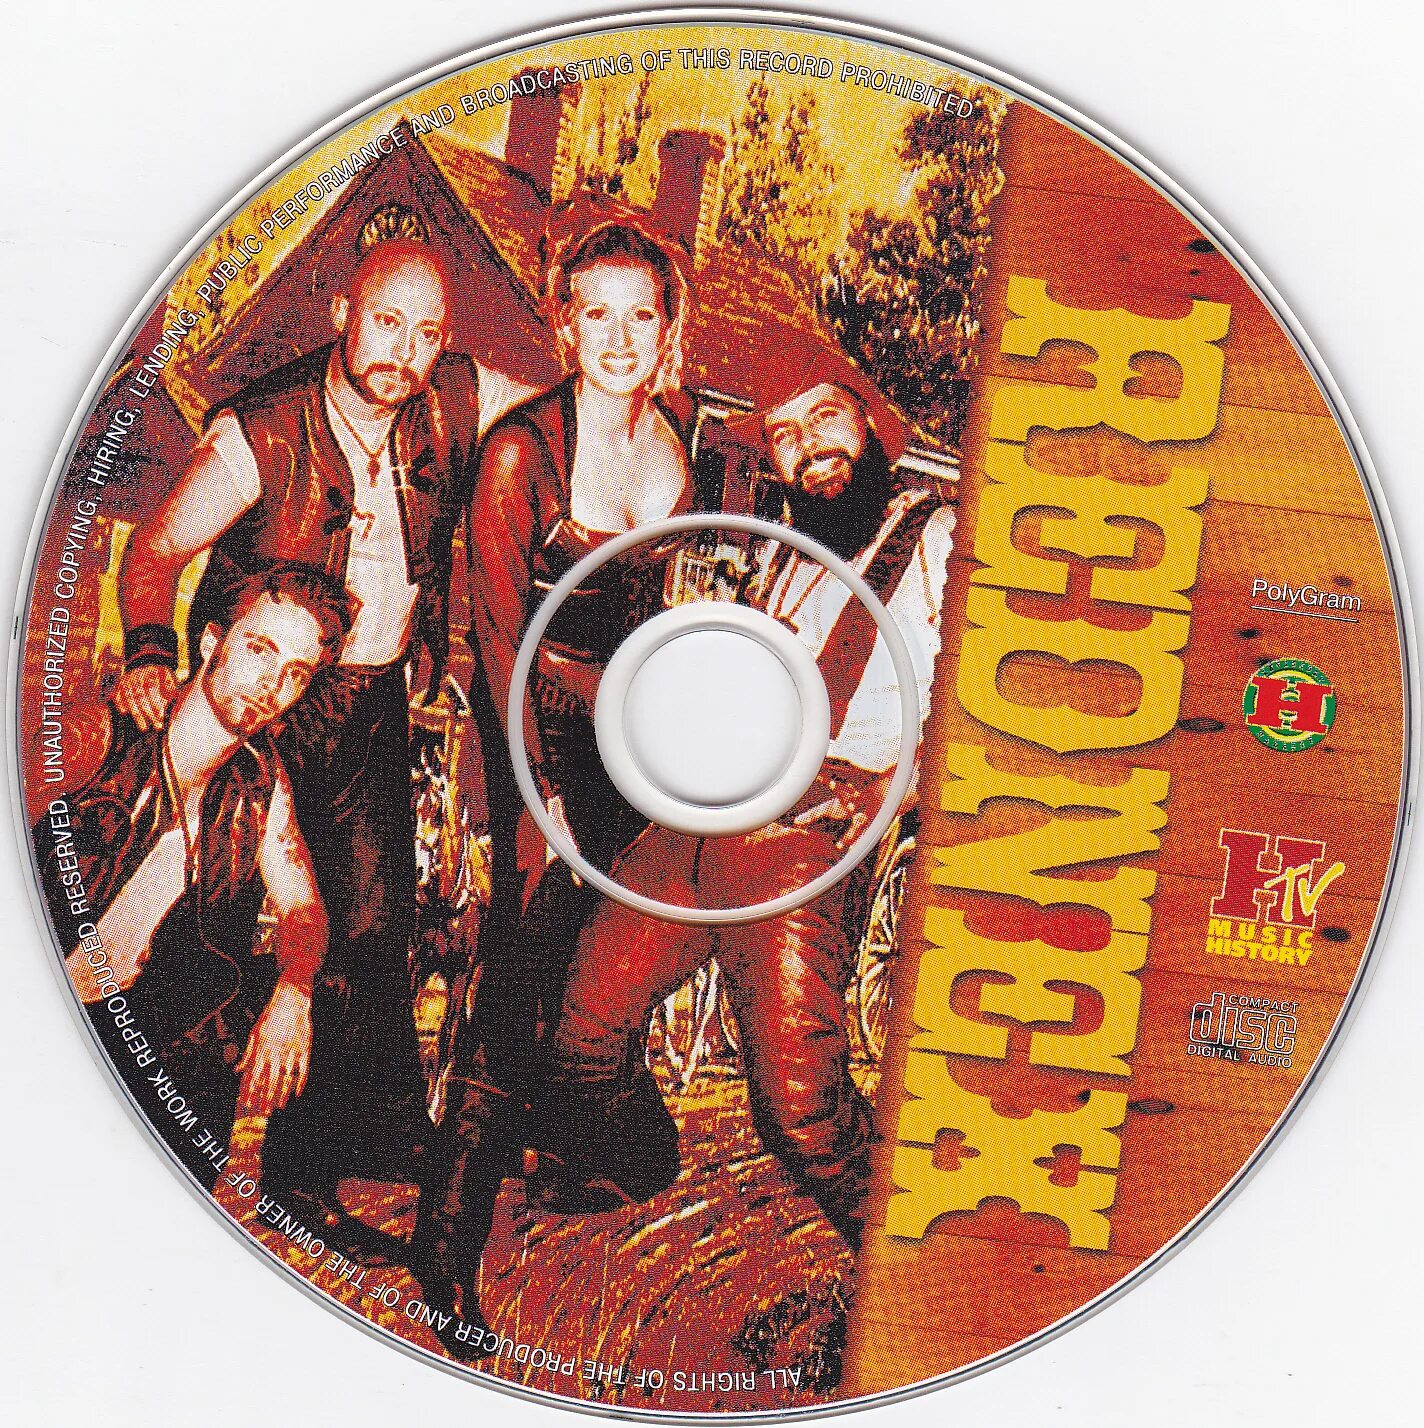 Rednex - Greatest Hits. Rednex CD. The best of the West Rednex. Rednex Cotton Eye Joe.